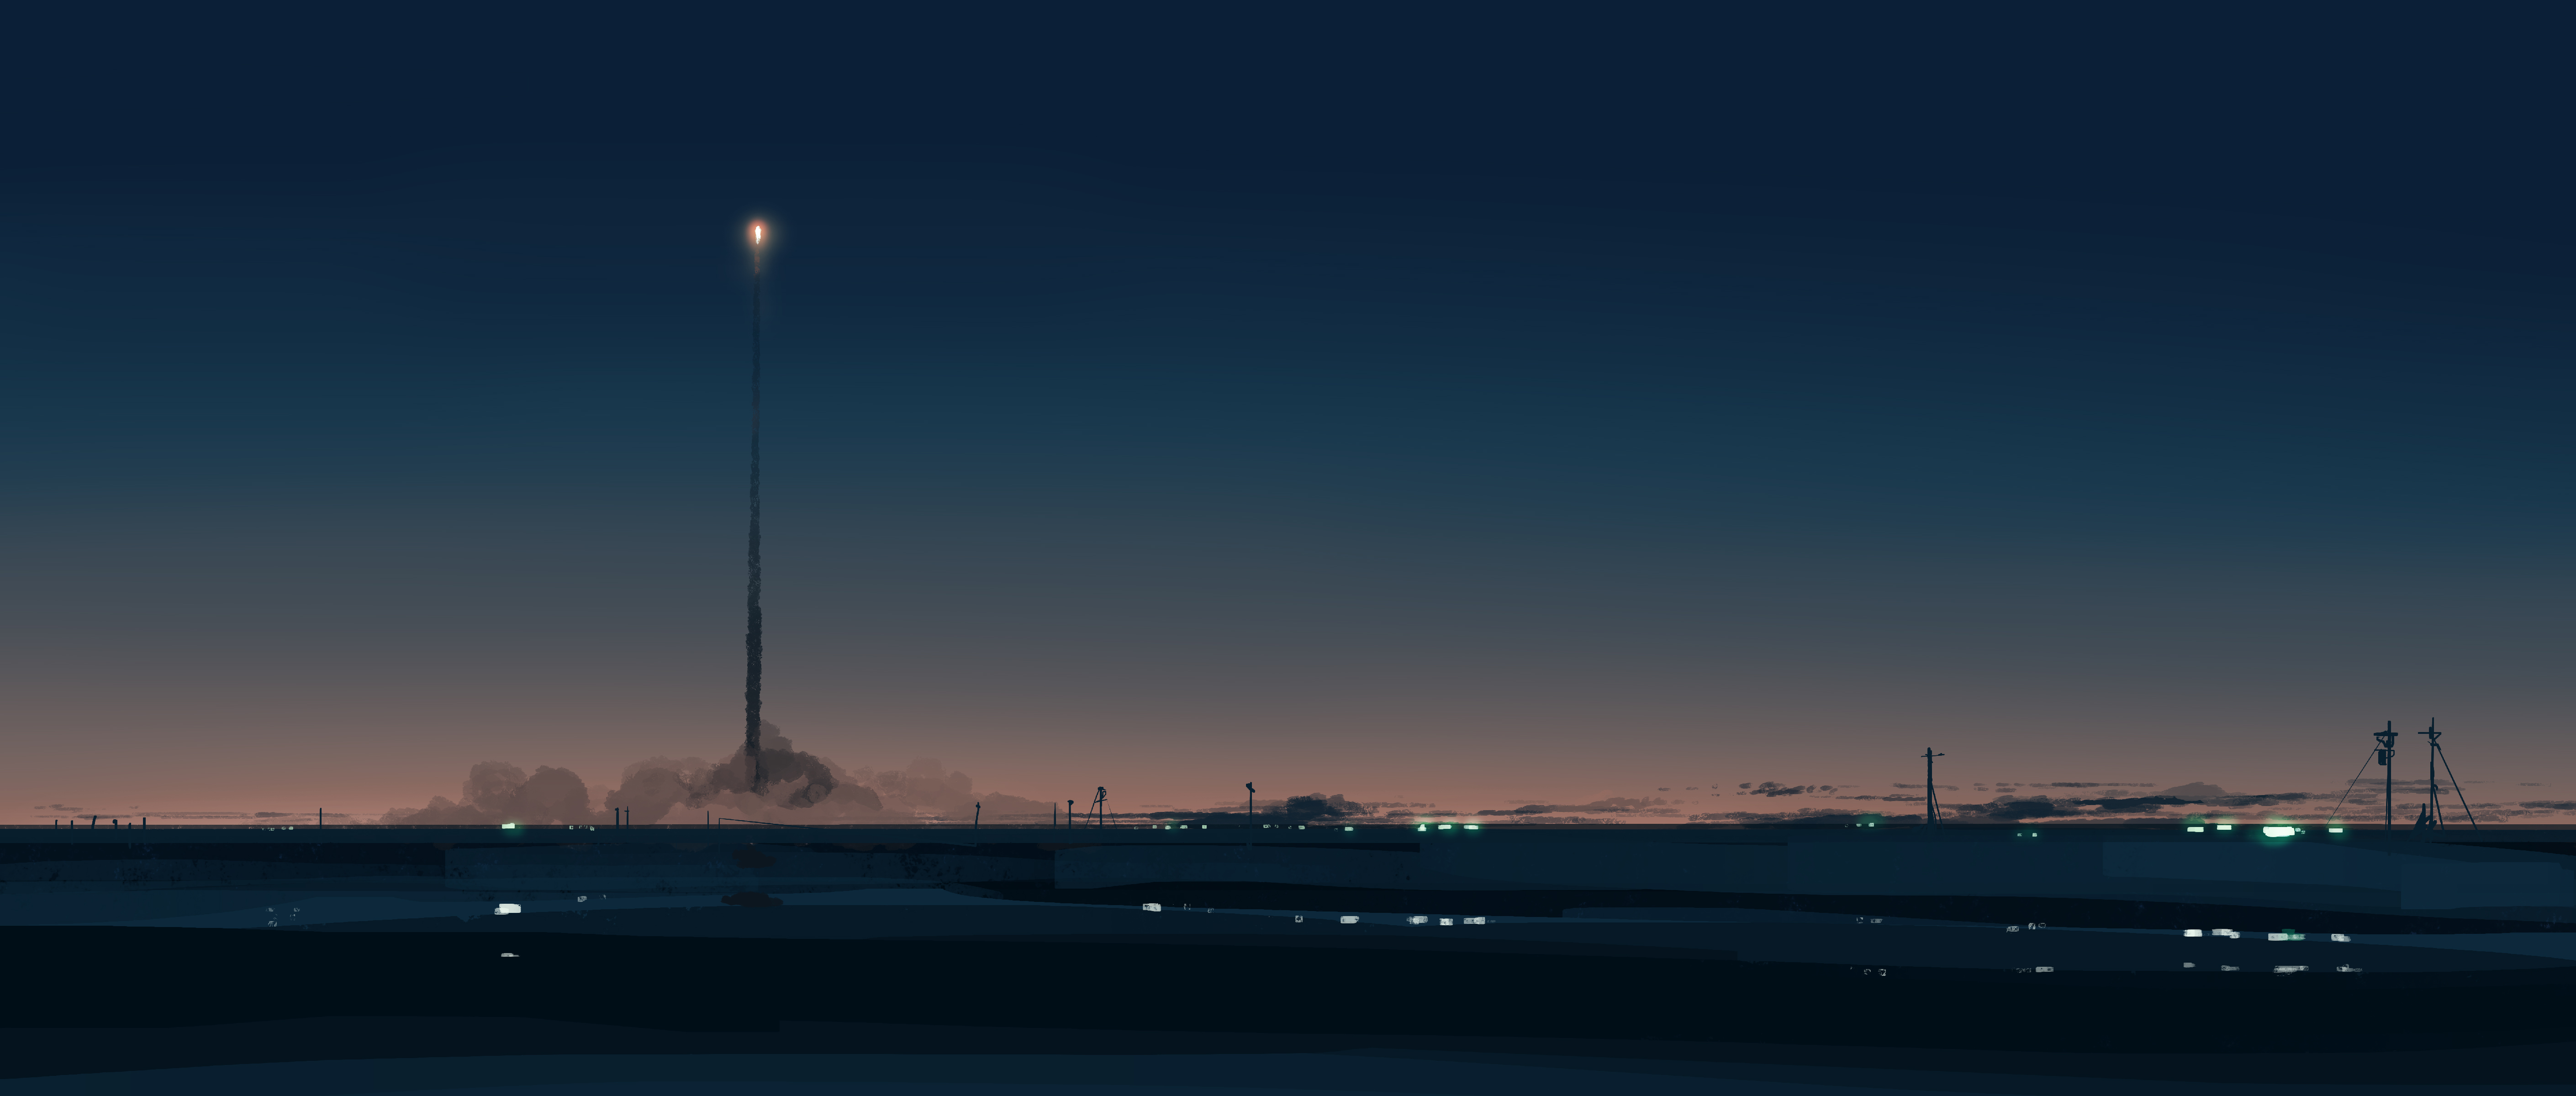 Gracile Digital Art Artwork Illustration Landscape Wide Screen Sunset Sky Smoke Blue Missiles Ultraw 5640x2400